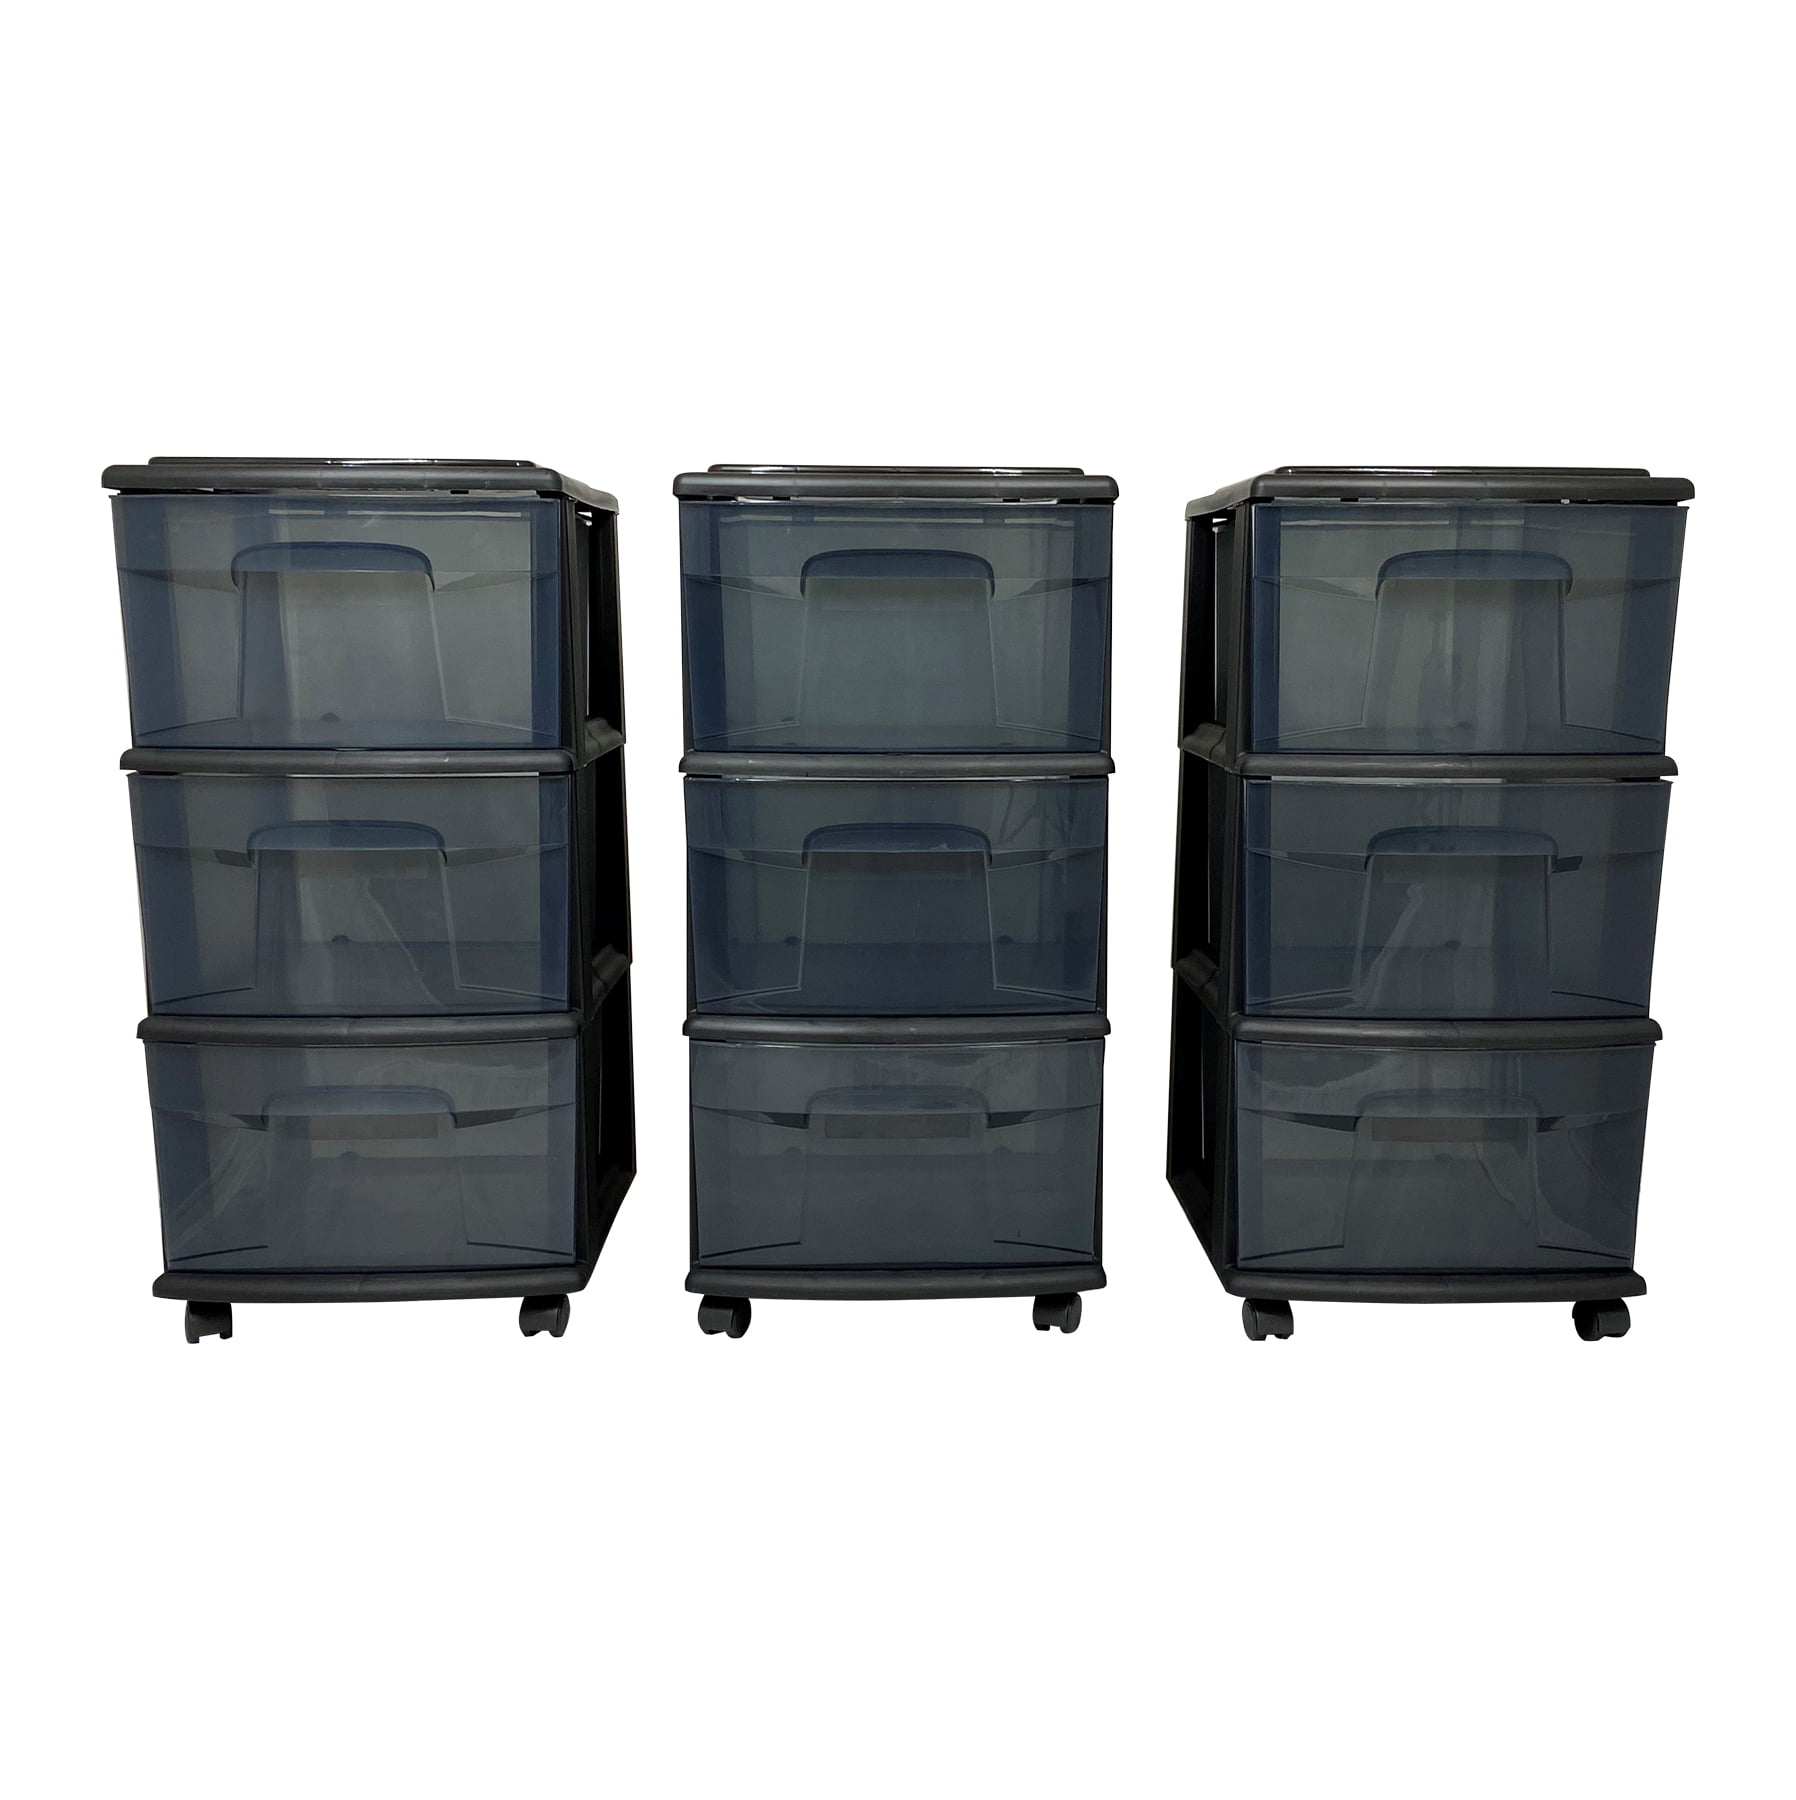 Homz 25 Inch Solid Plastic 3 Drawer Wheeled Storage Organizer Cart (3